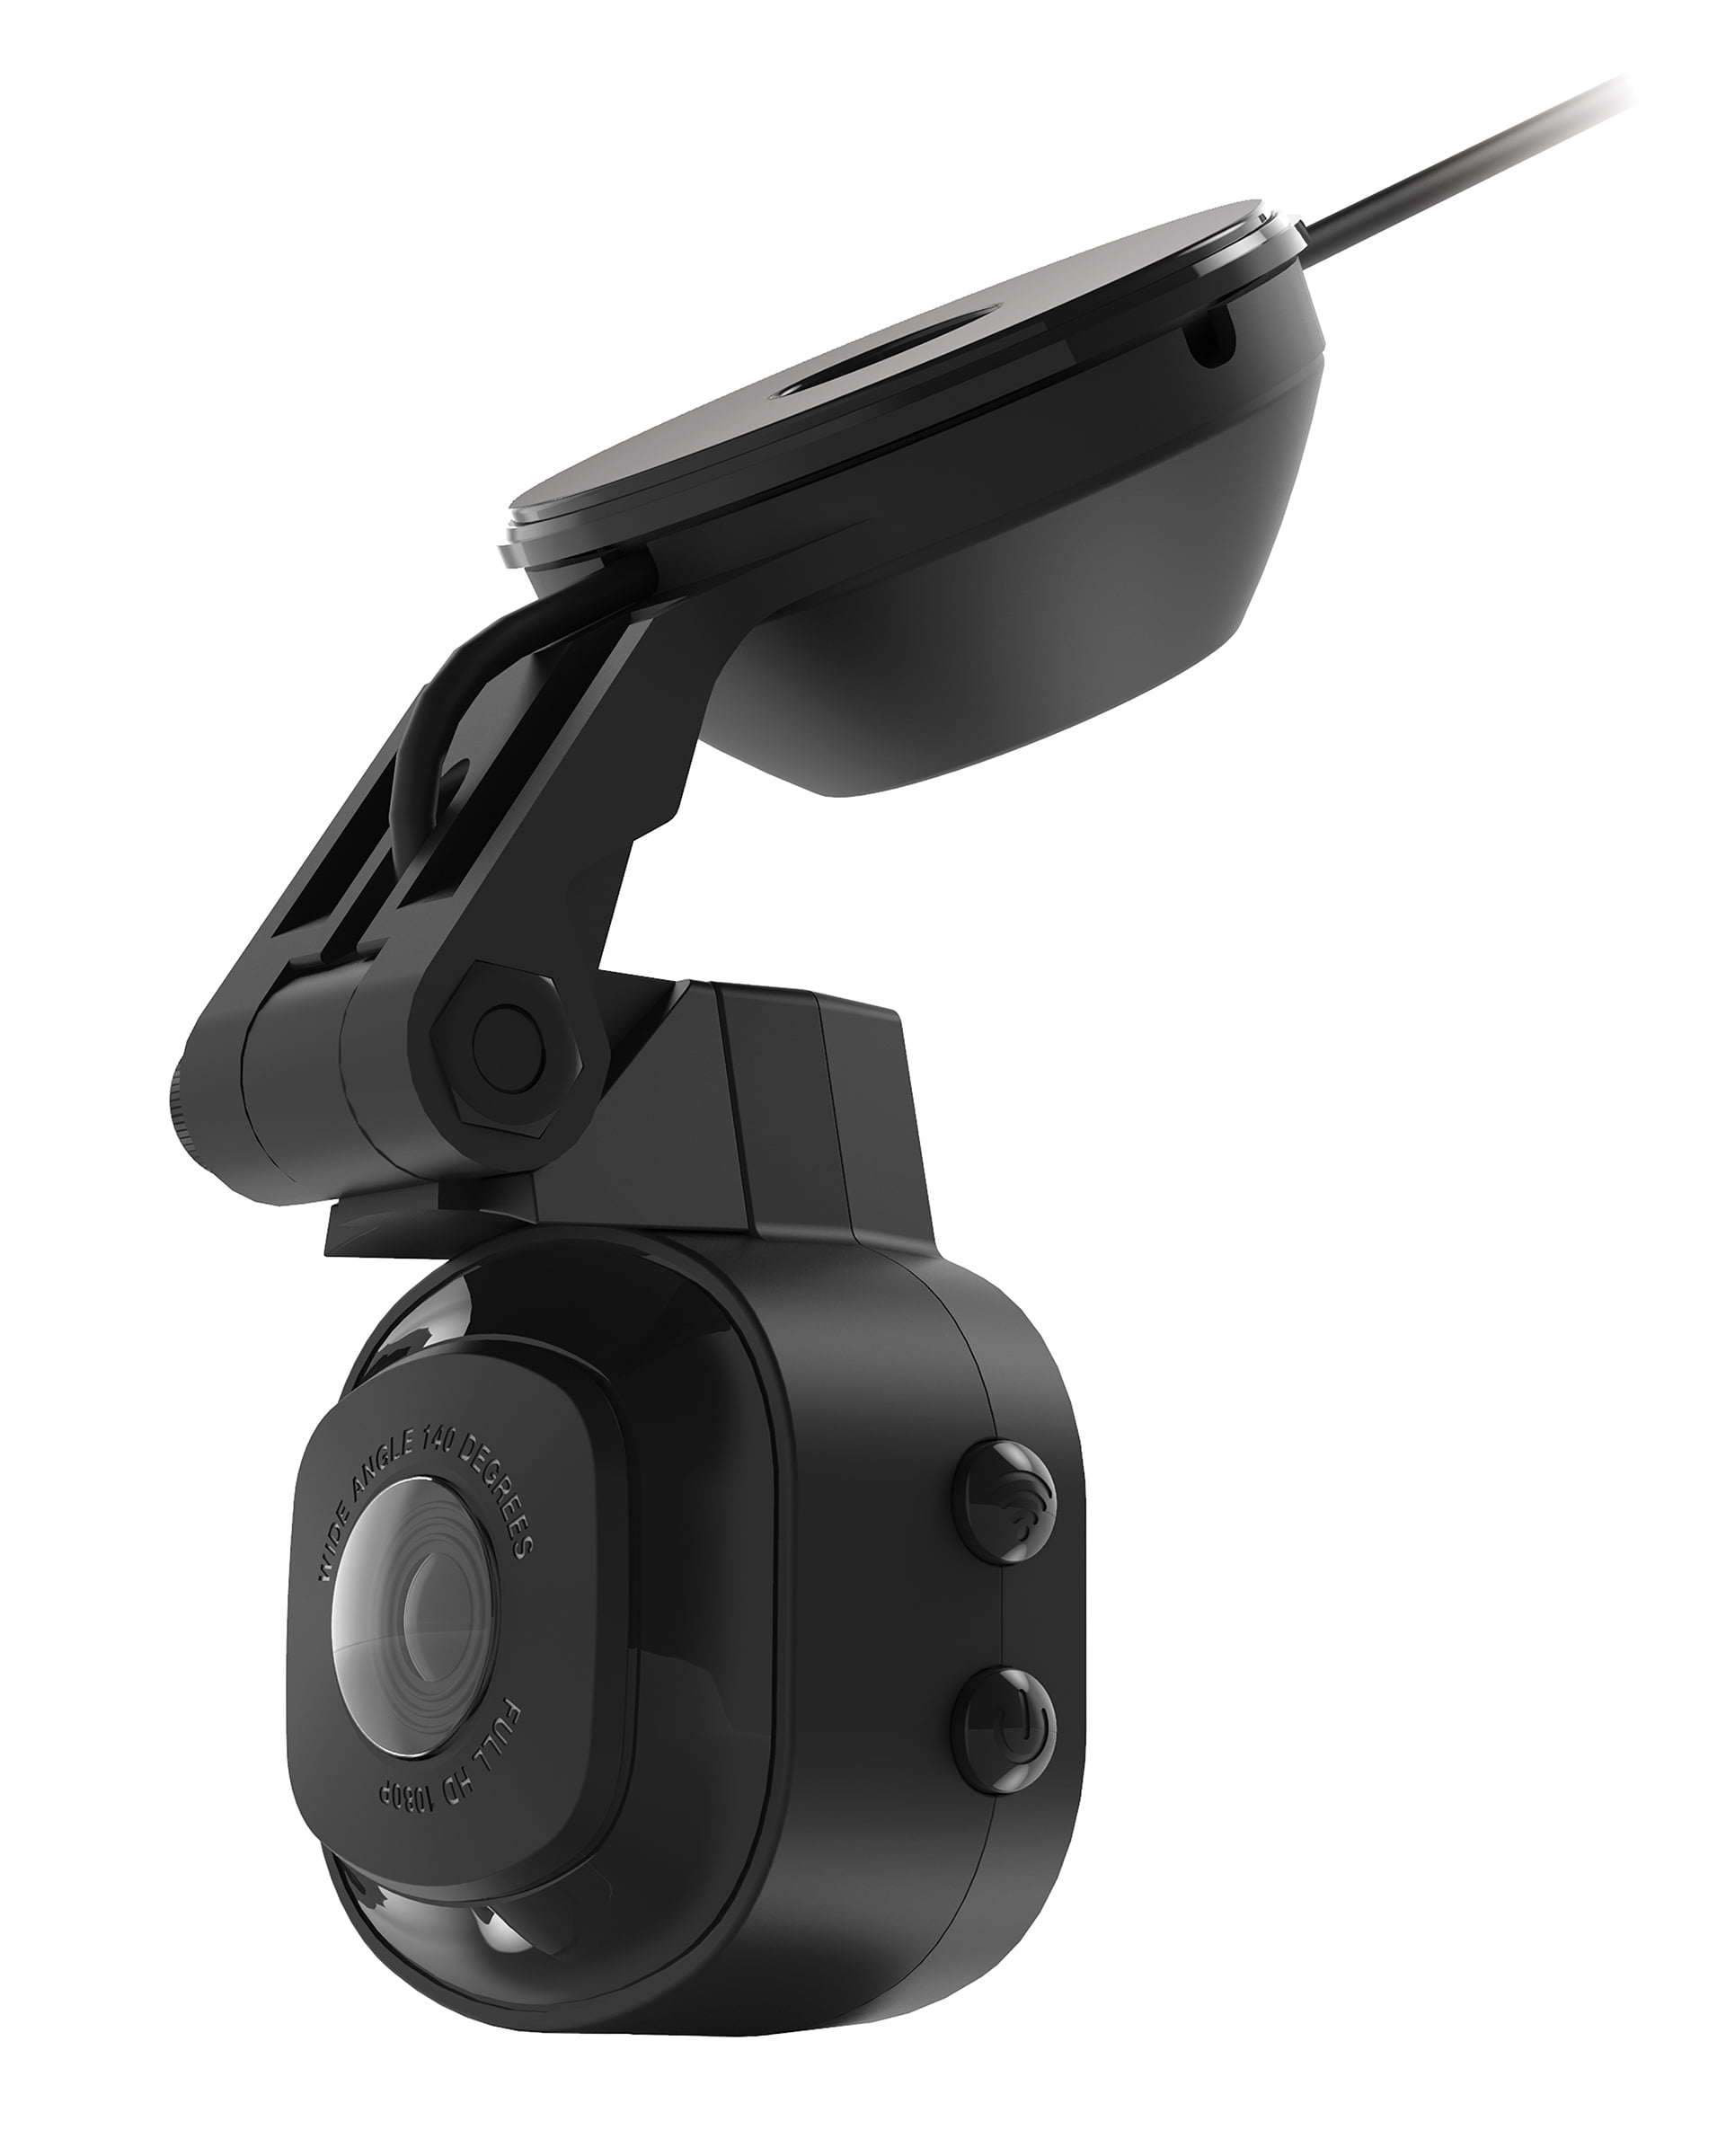 Review: Nexar Pro Dual Dash Camera 